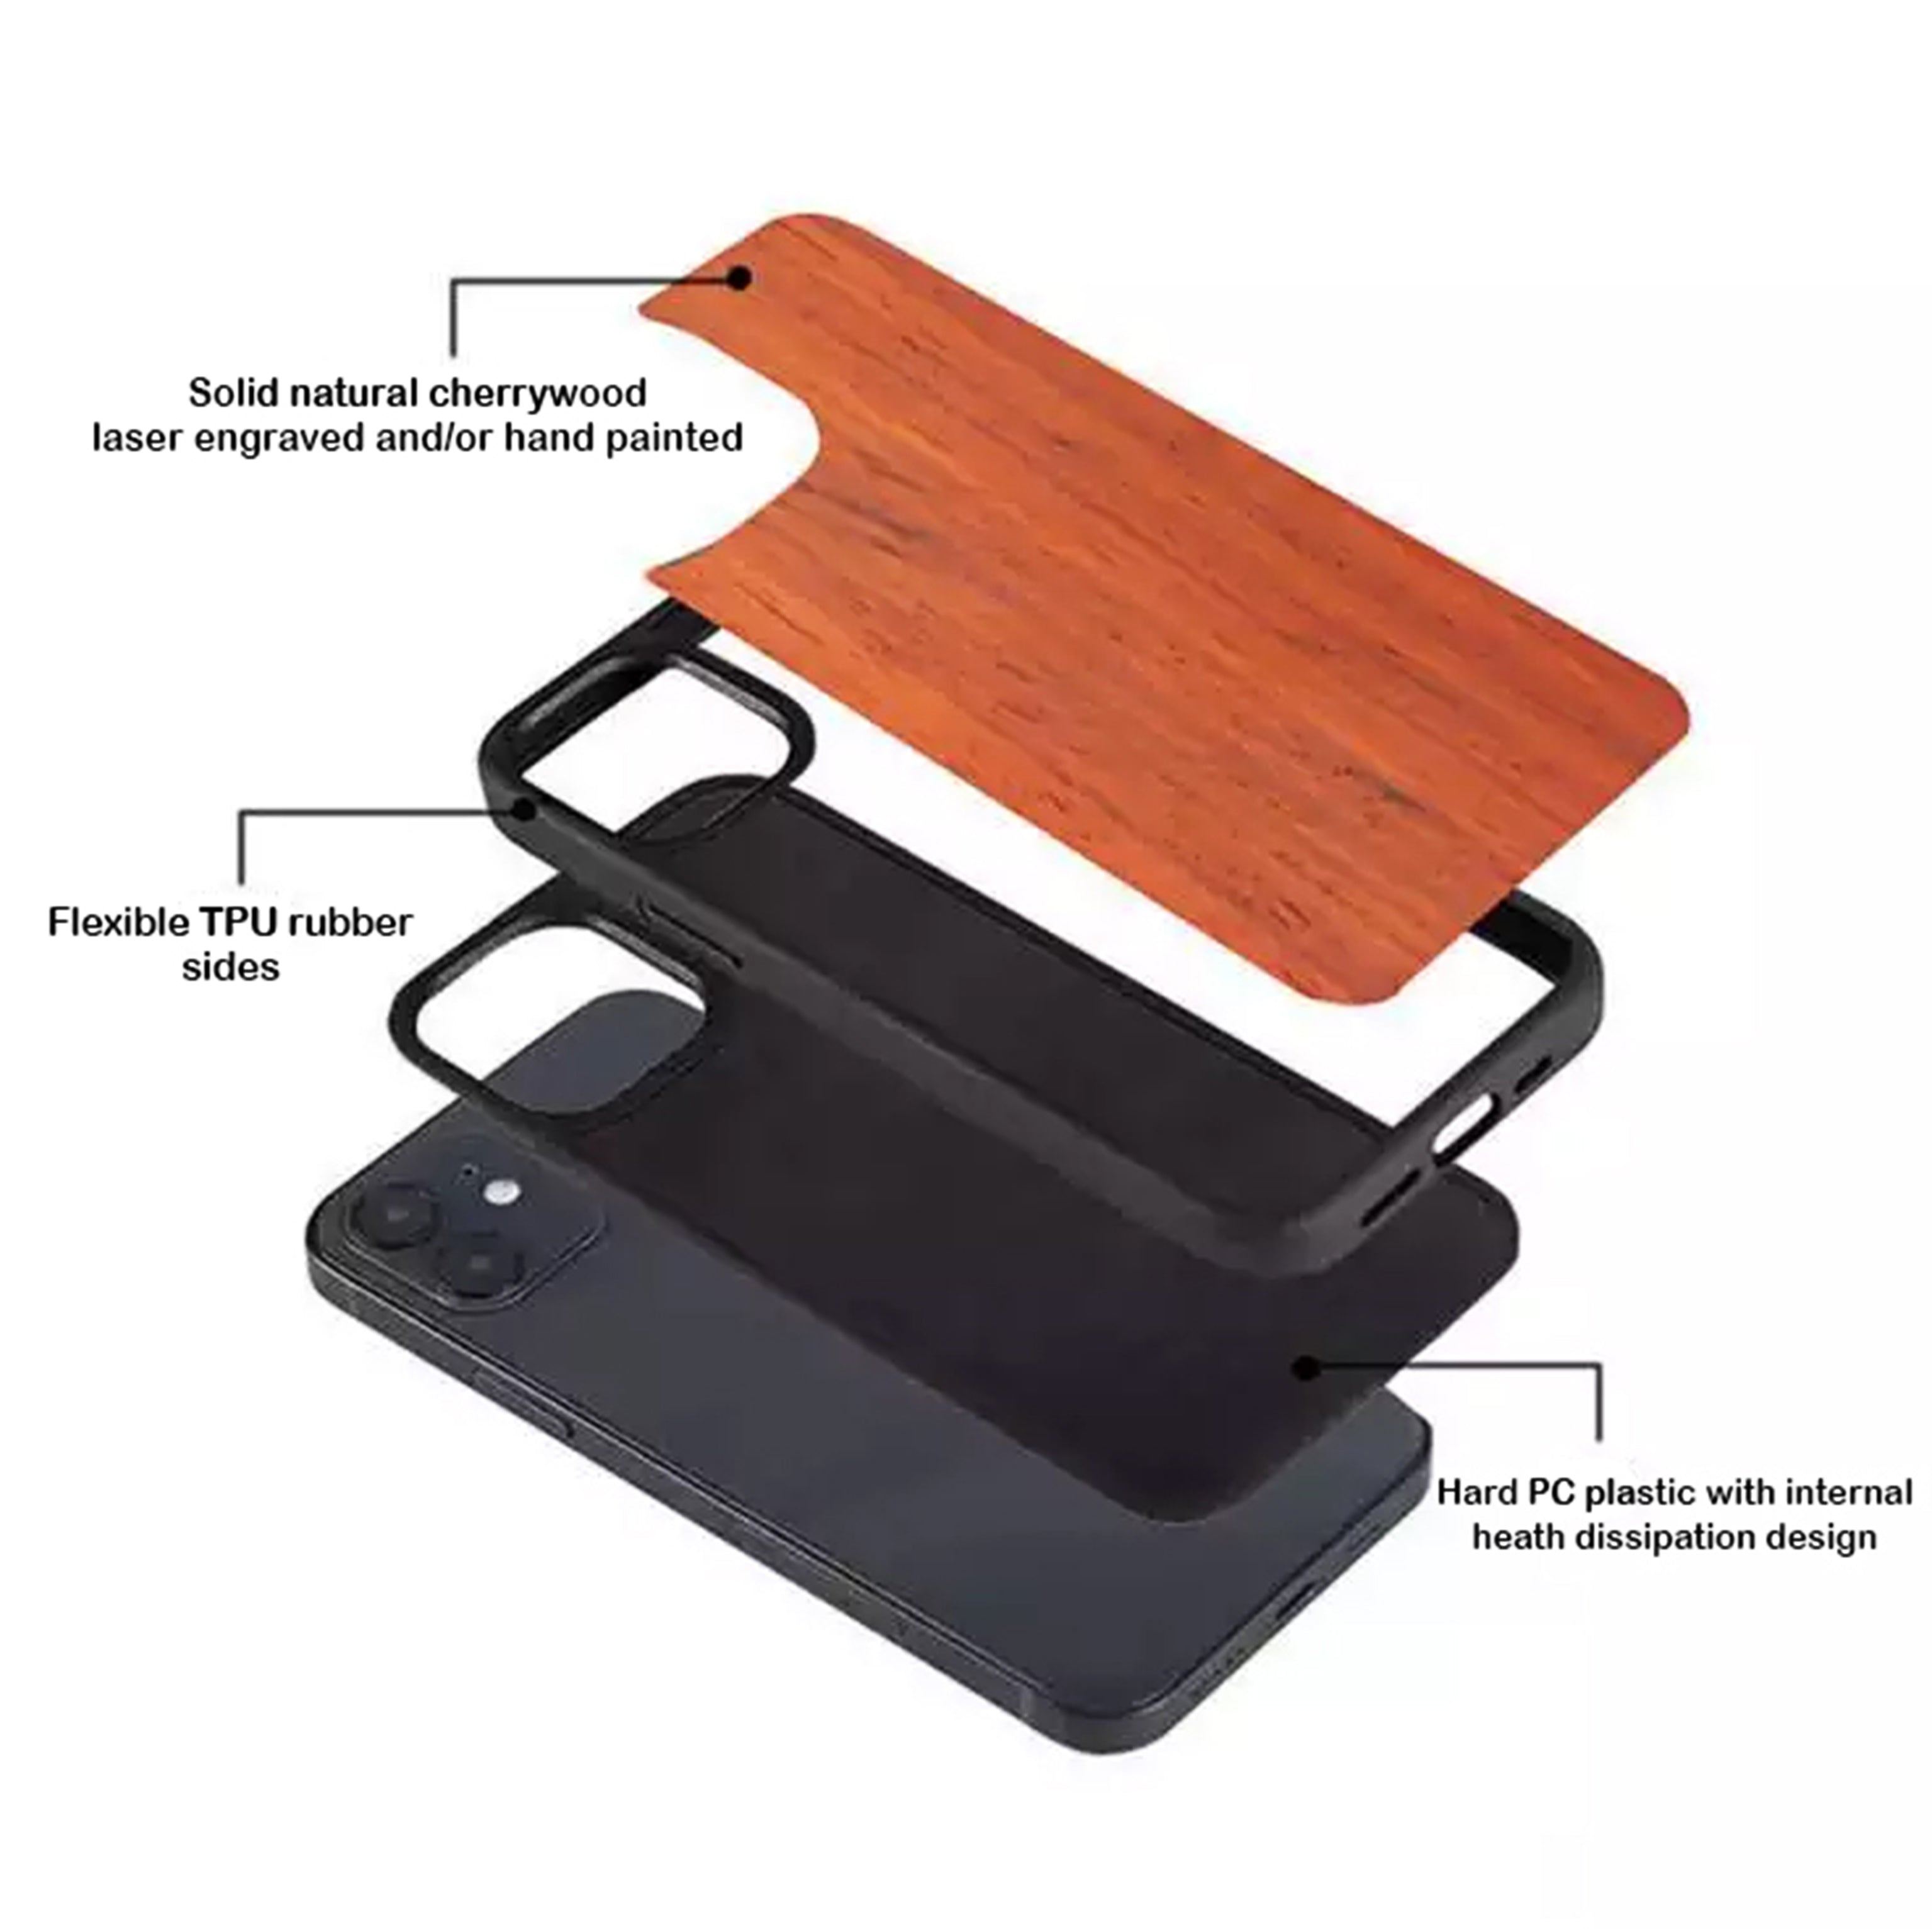 iPhone & Samsung Galaxy Wood Phone Case - Premium Wood Phone Cases: Gothic, Viking, and Ornate